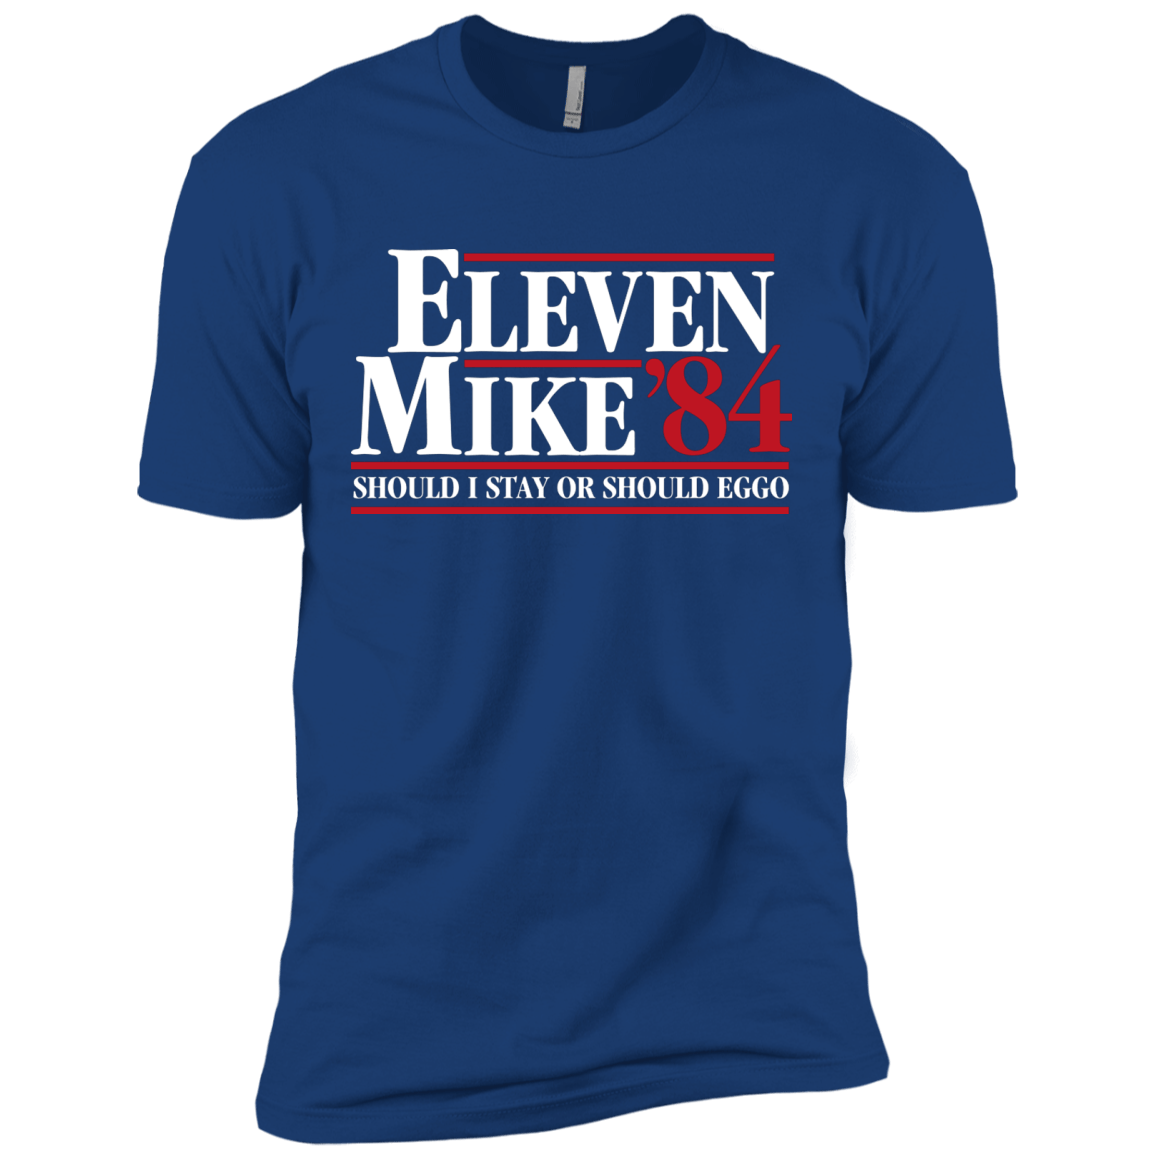 T-Shirts Royal / X-Small Eleven Mike 84 - Should I Stay or Should Eggo Men's Premium T-Shirt